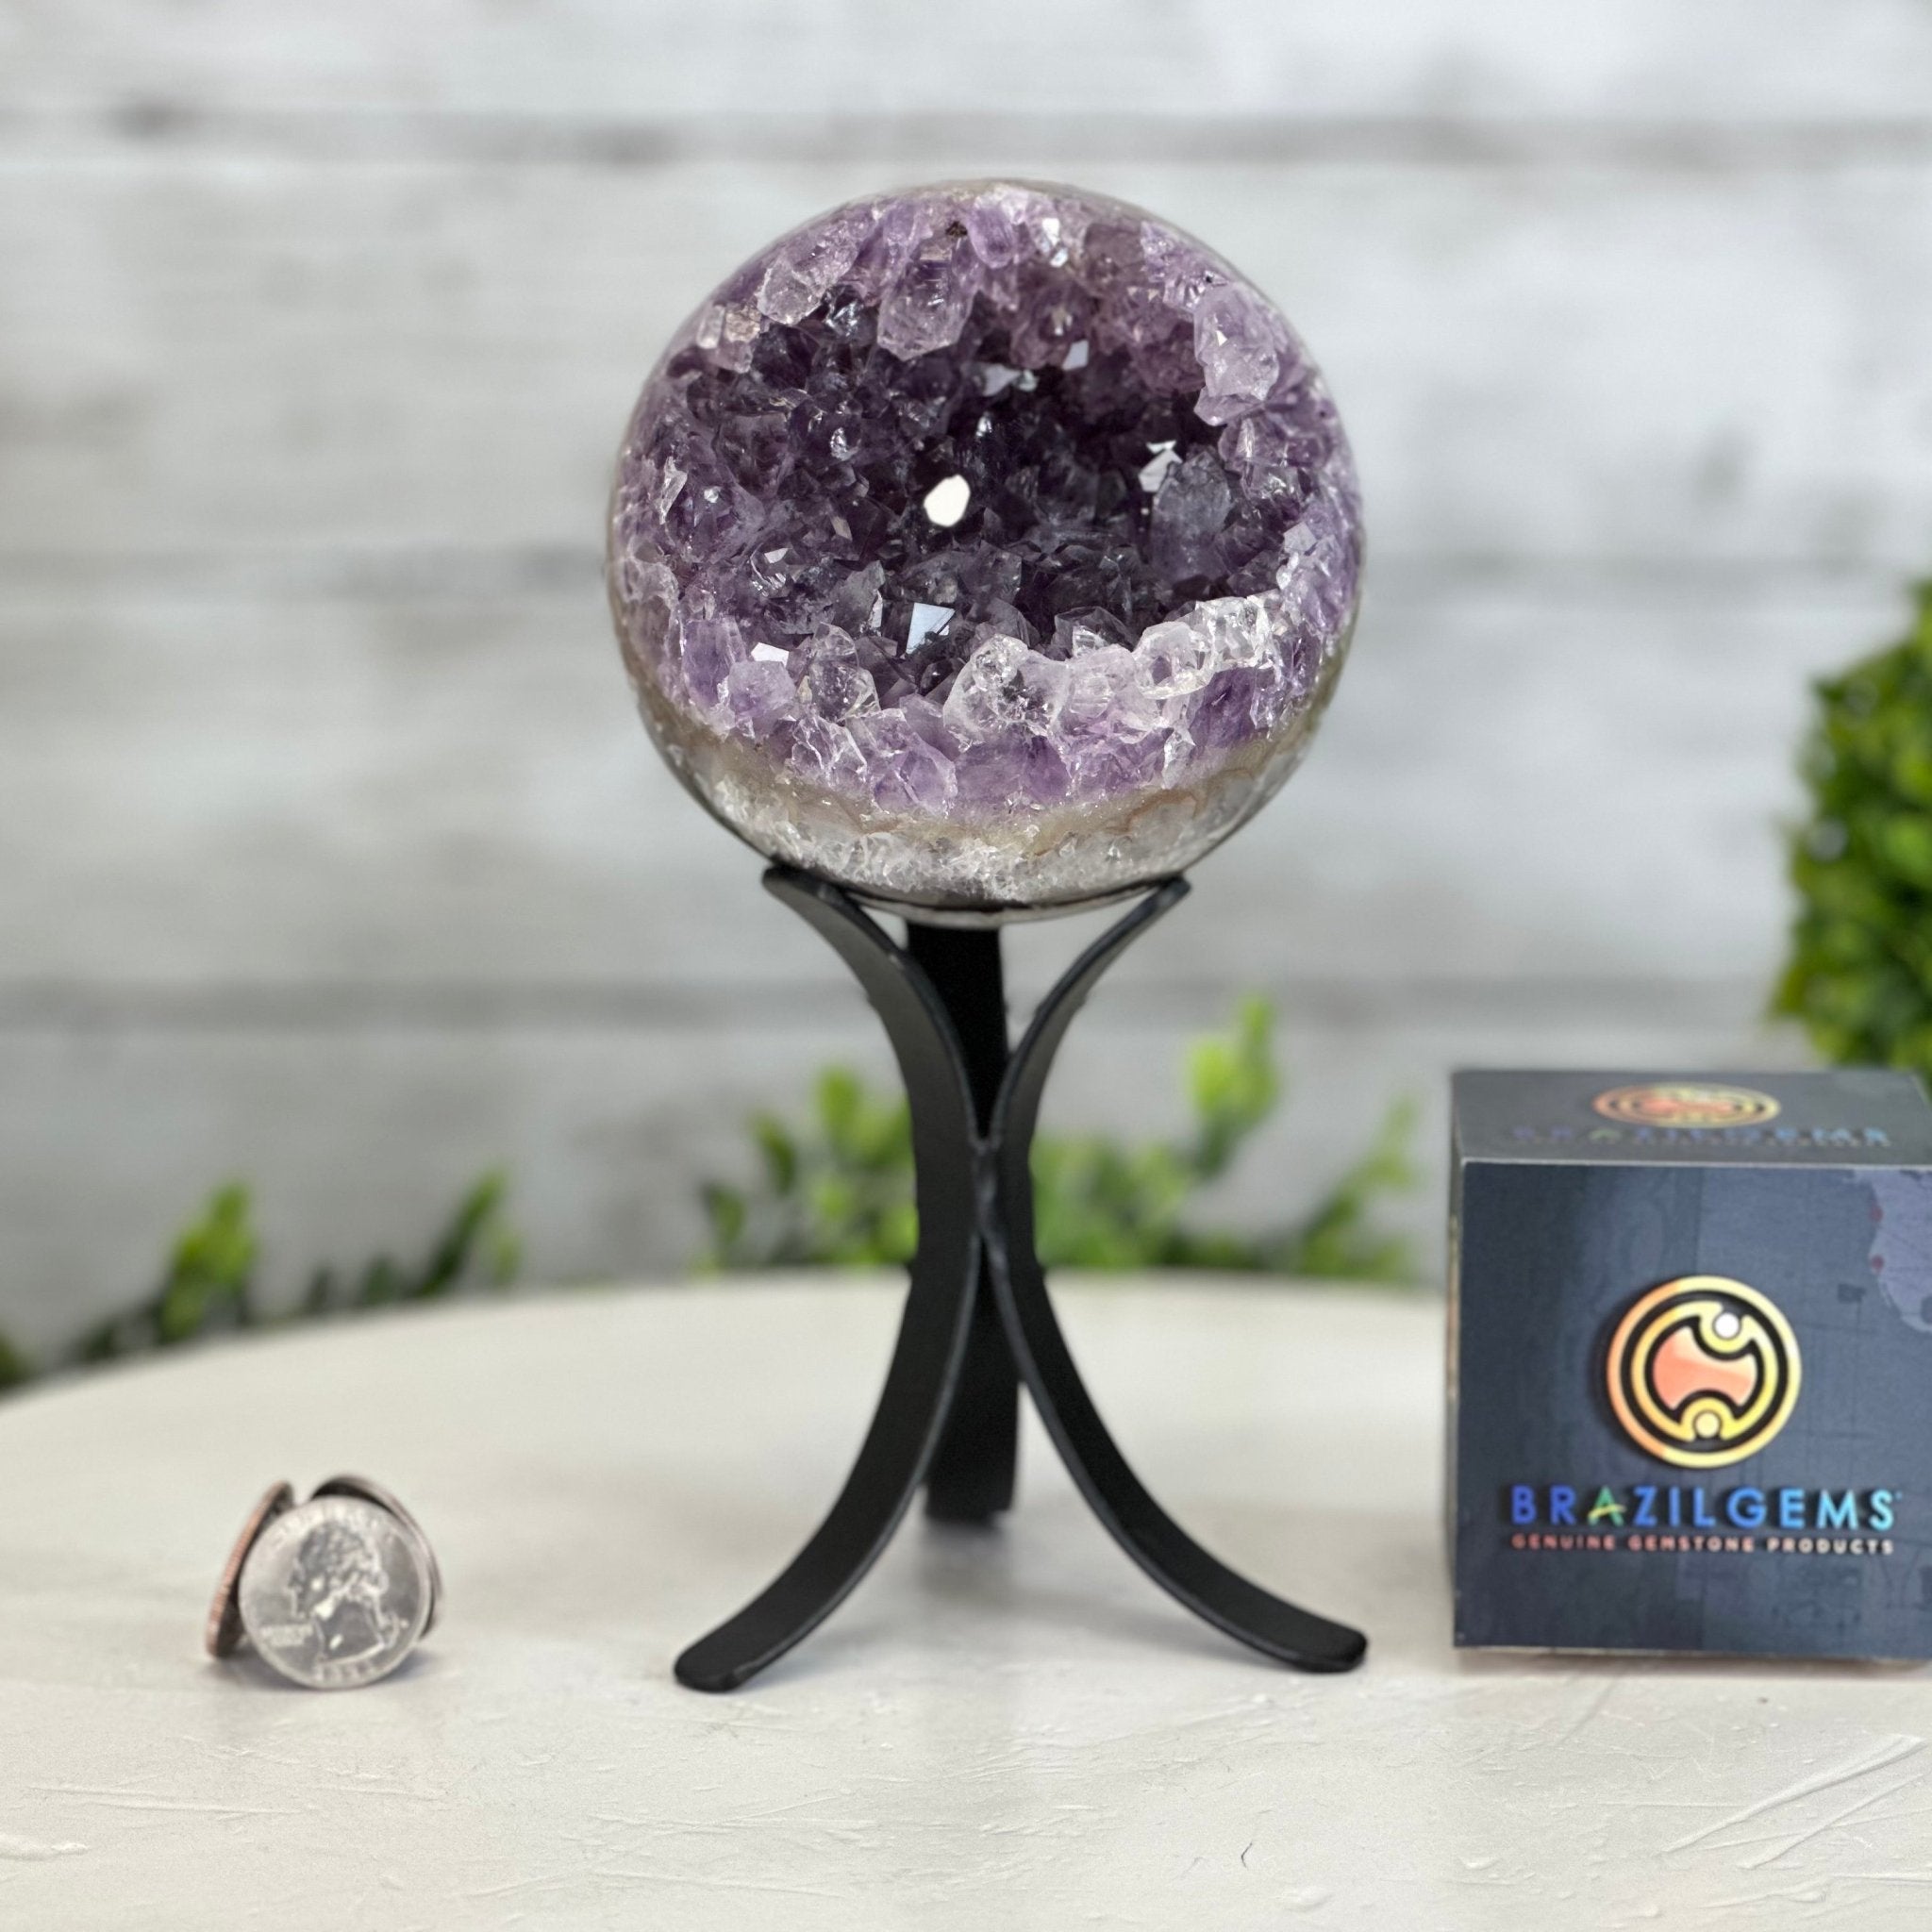 Druzy Amethyst Sphere on a Metal Stand, 2.3 lbs & 7.5" Tall #5630-0046 - Brazil GemsBrazil GemsDruzy Amethyst Sphere on a Metal Stand, 2.3 lbs & 7.5" Tall #5630-0046Spheres5630-0046